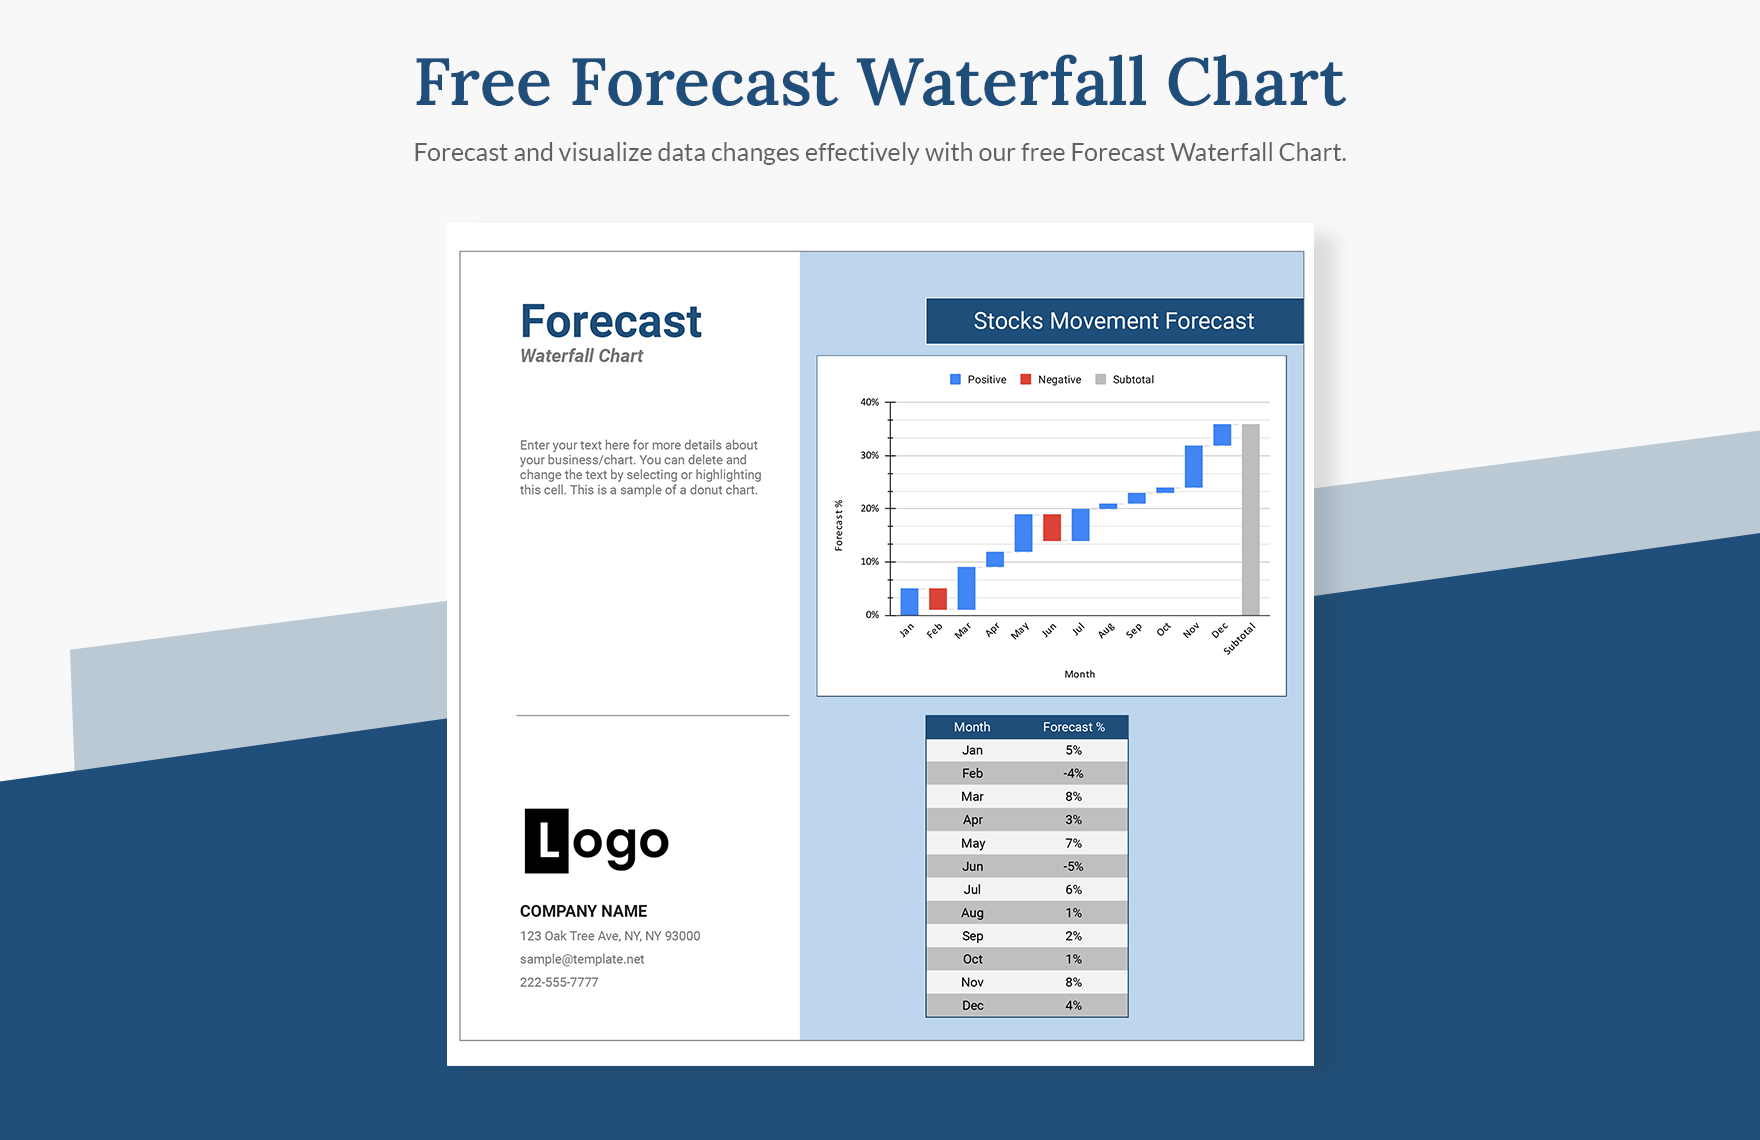 Free Forecast Waterfall Chart